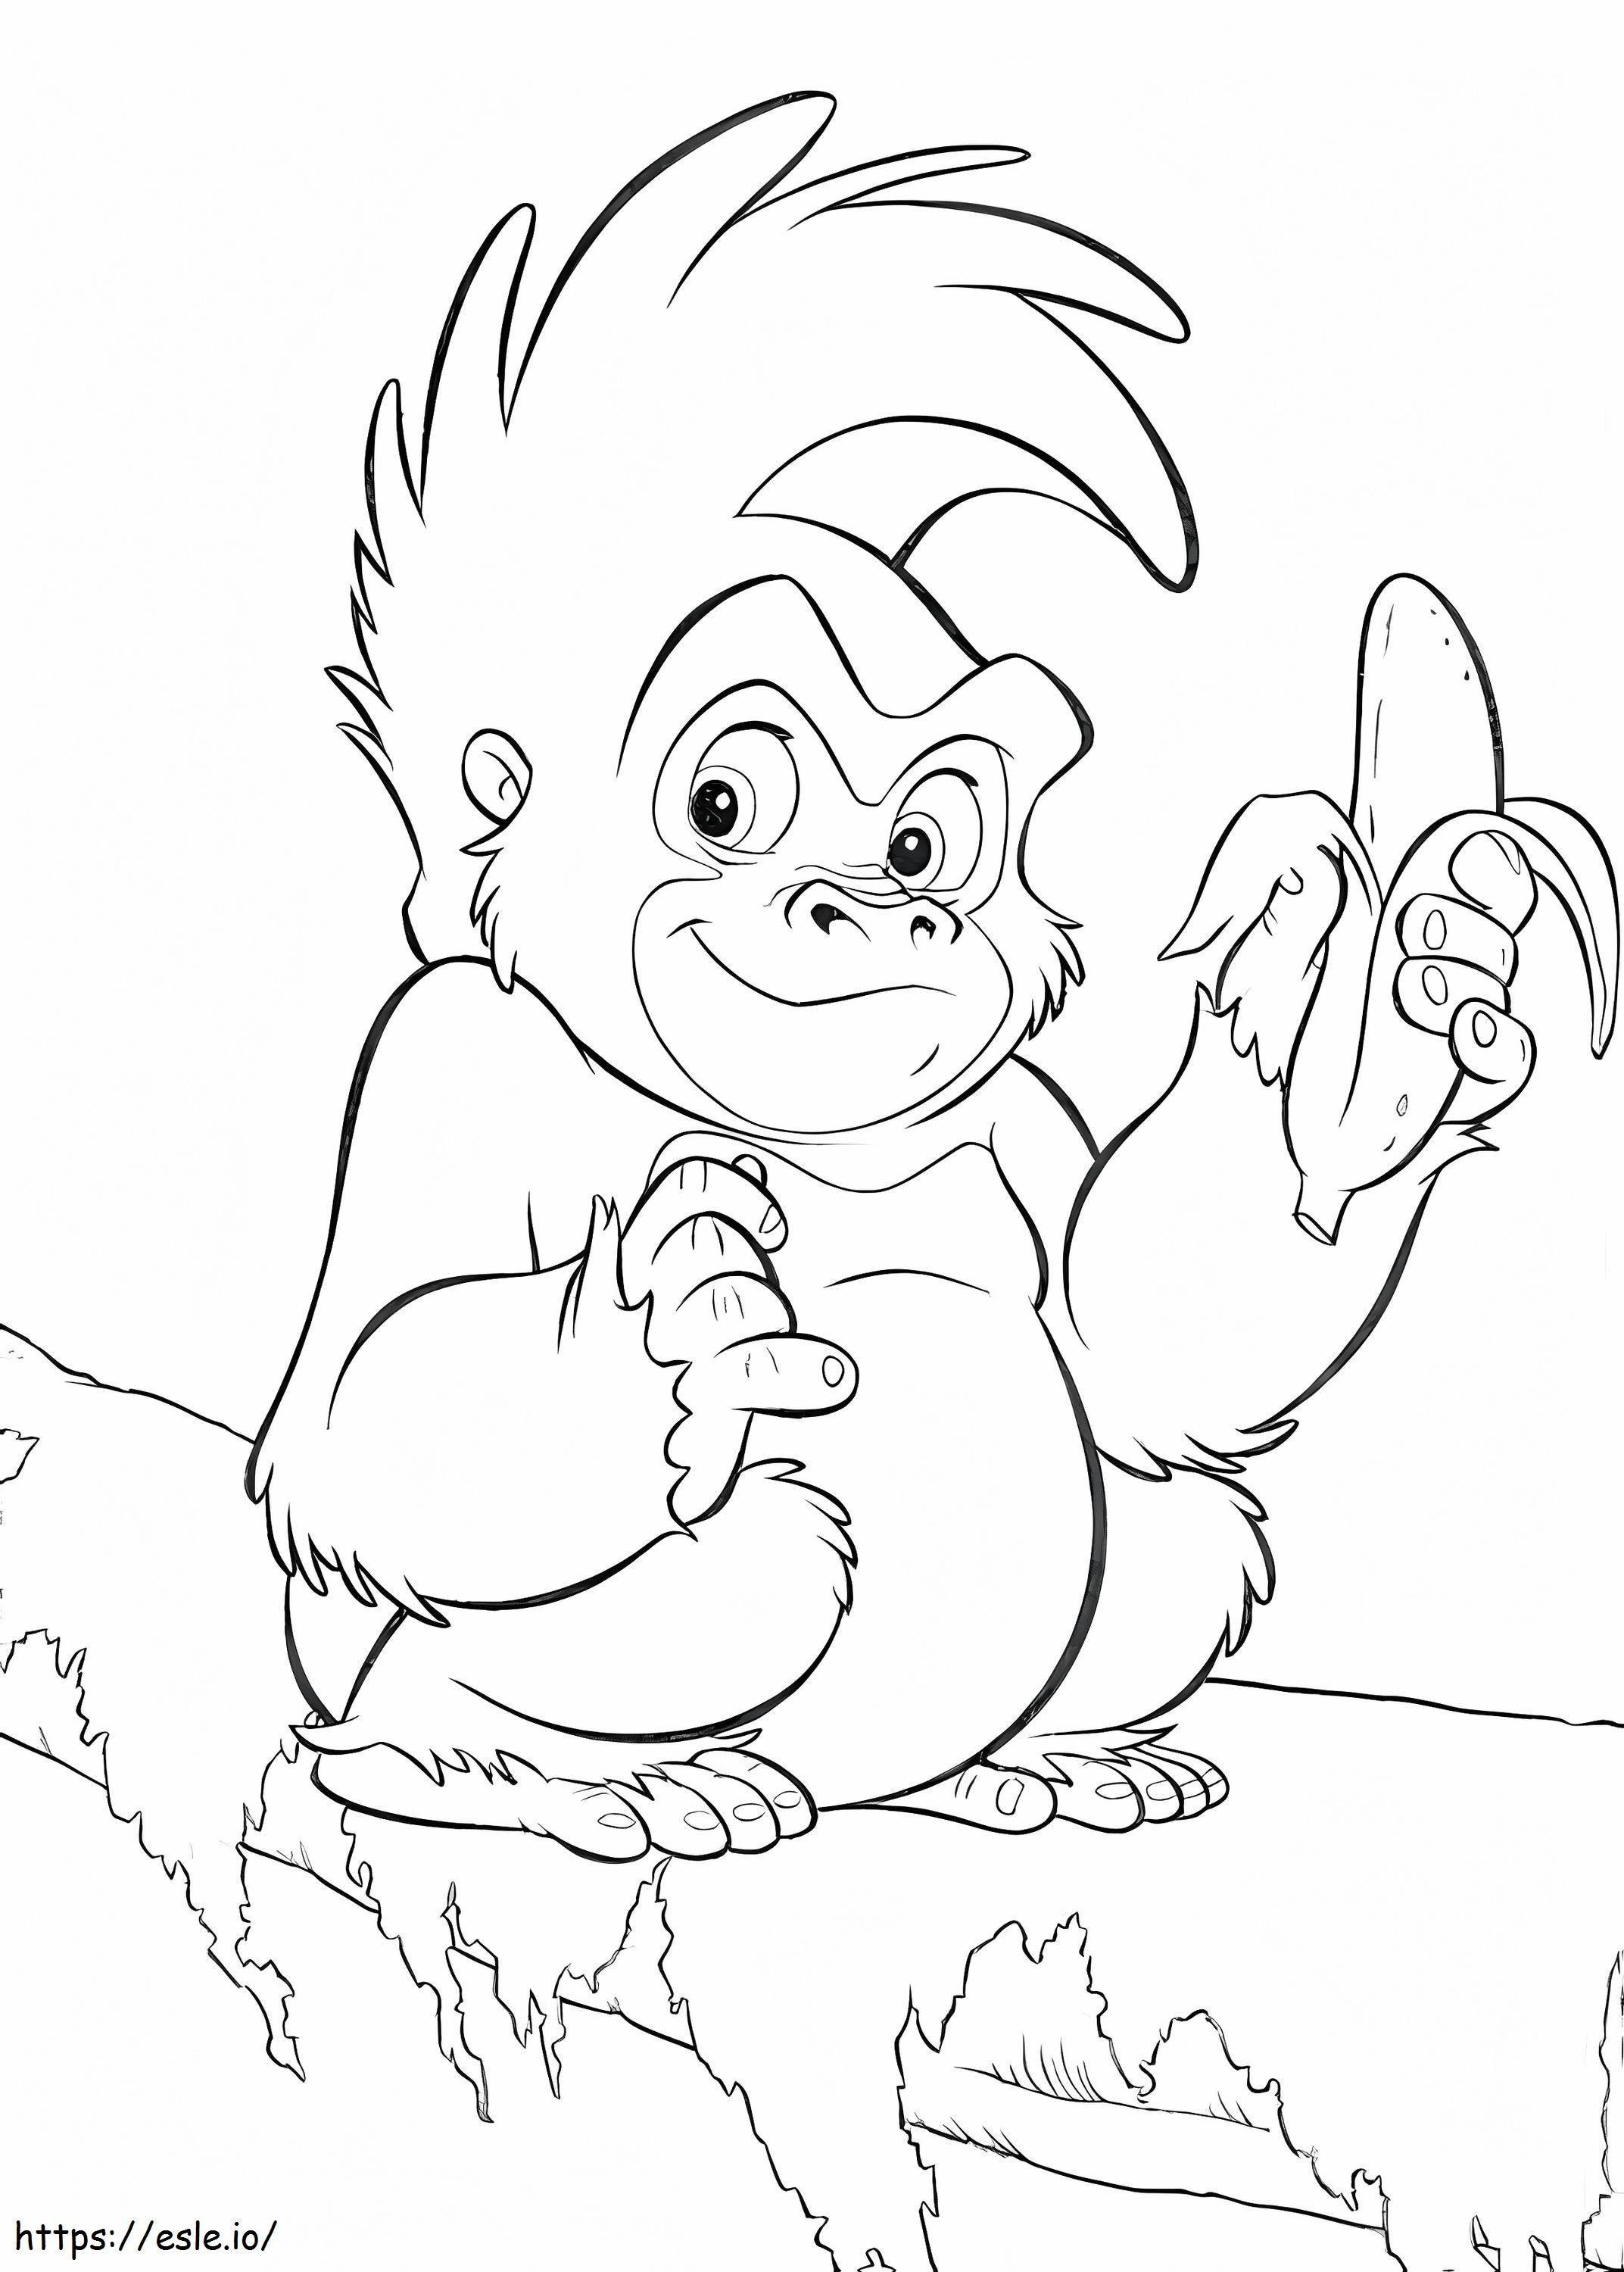 Gorila de dibujos animados con plátano para colorear